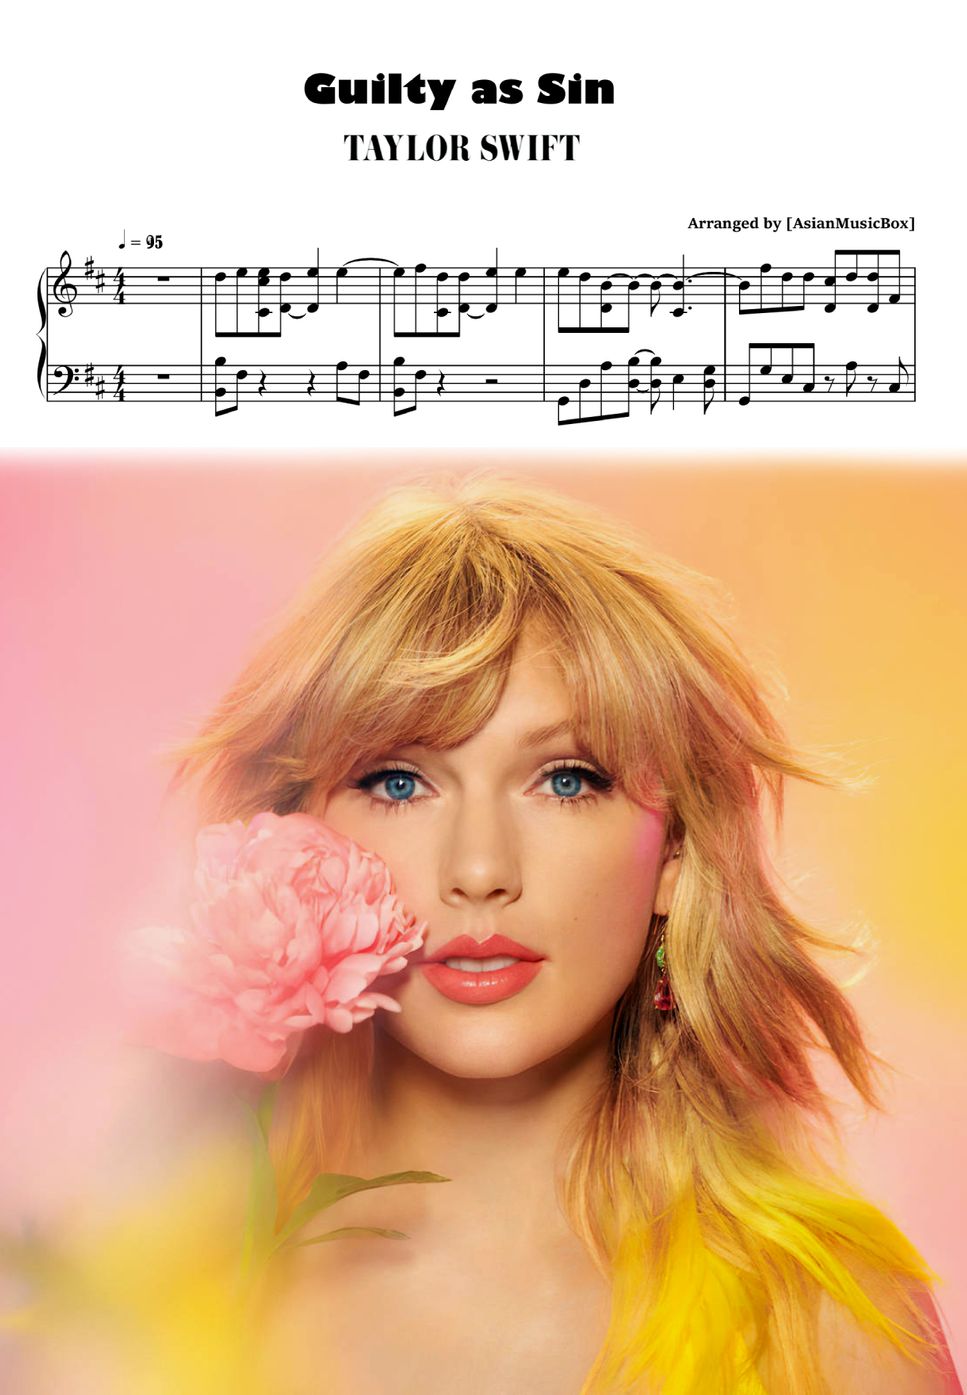 Taylor Swift - Guilty as Sin? (Sheet, MIDI, MultiTracks & WAV) by AsianMusicBox